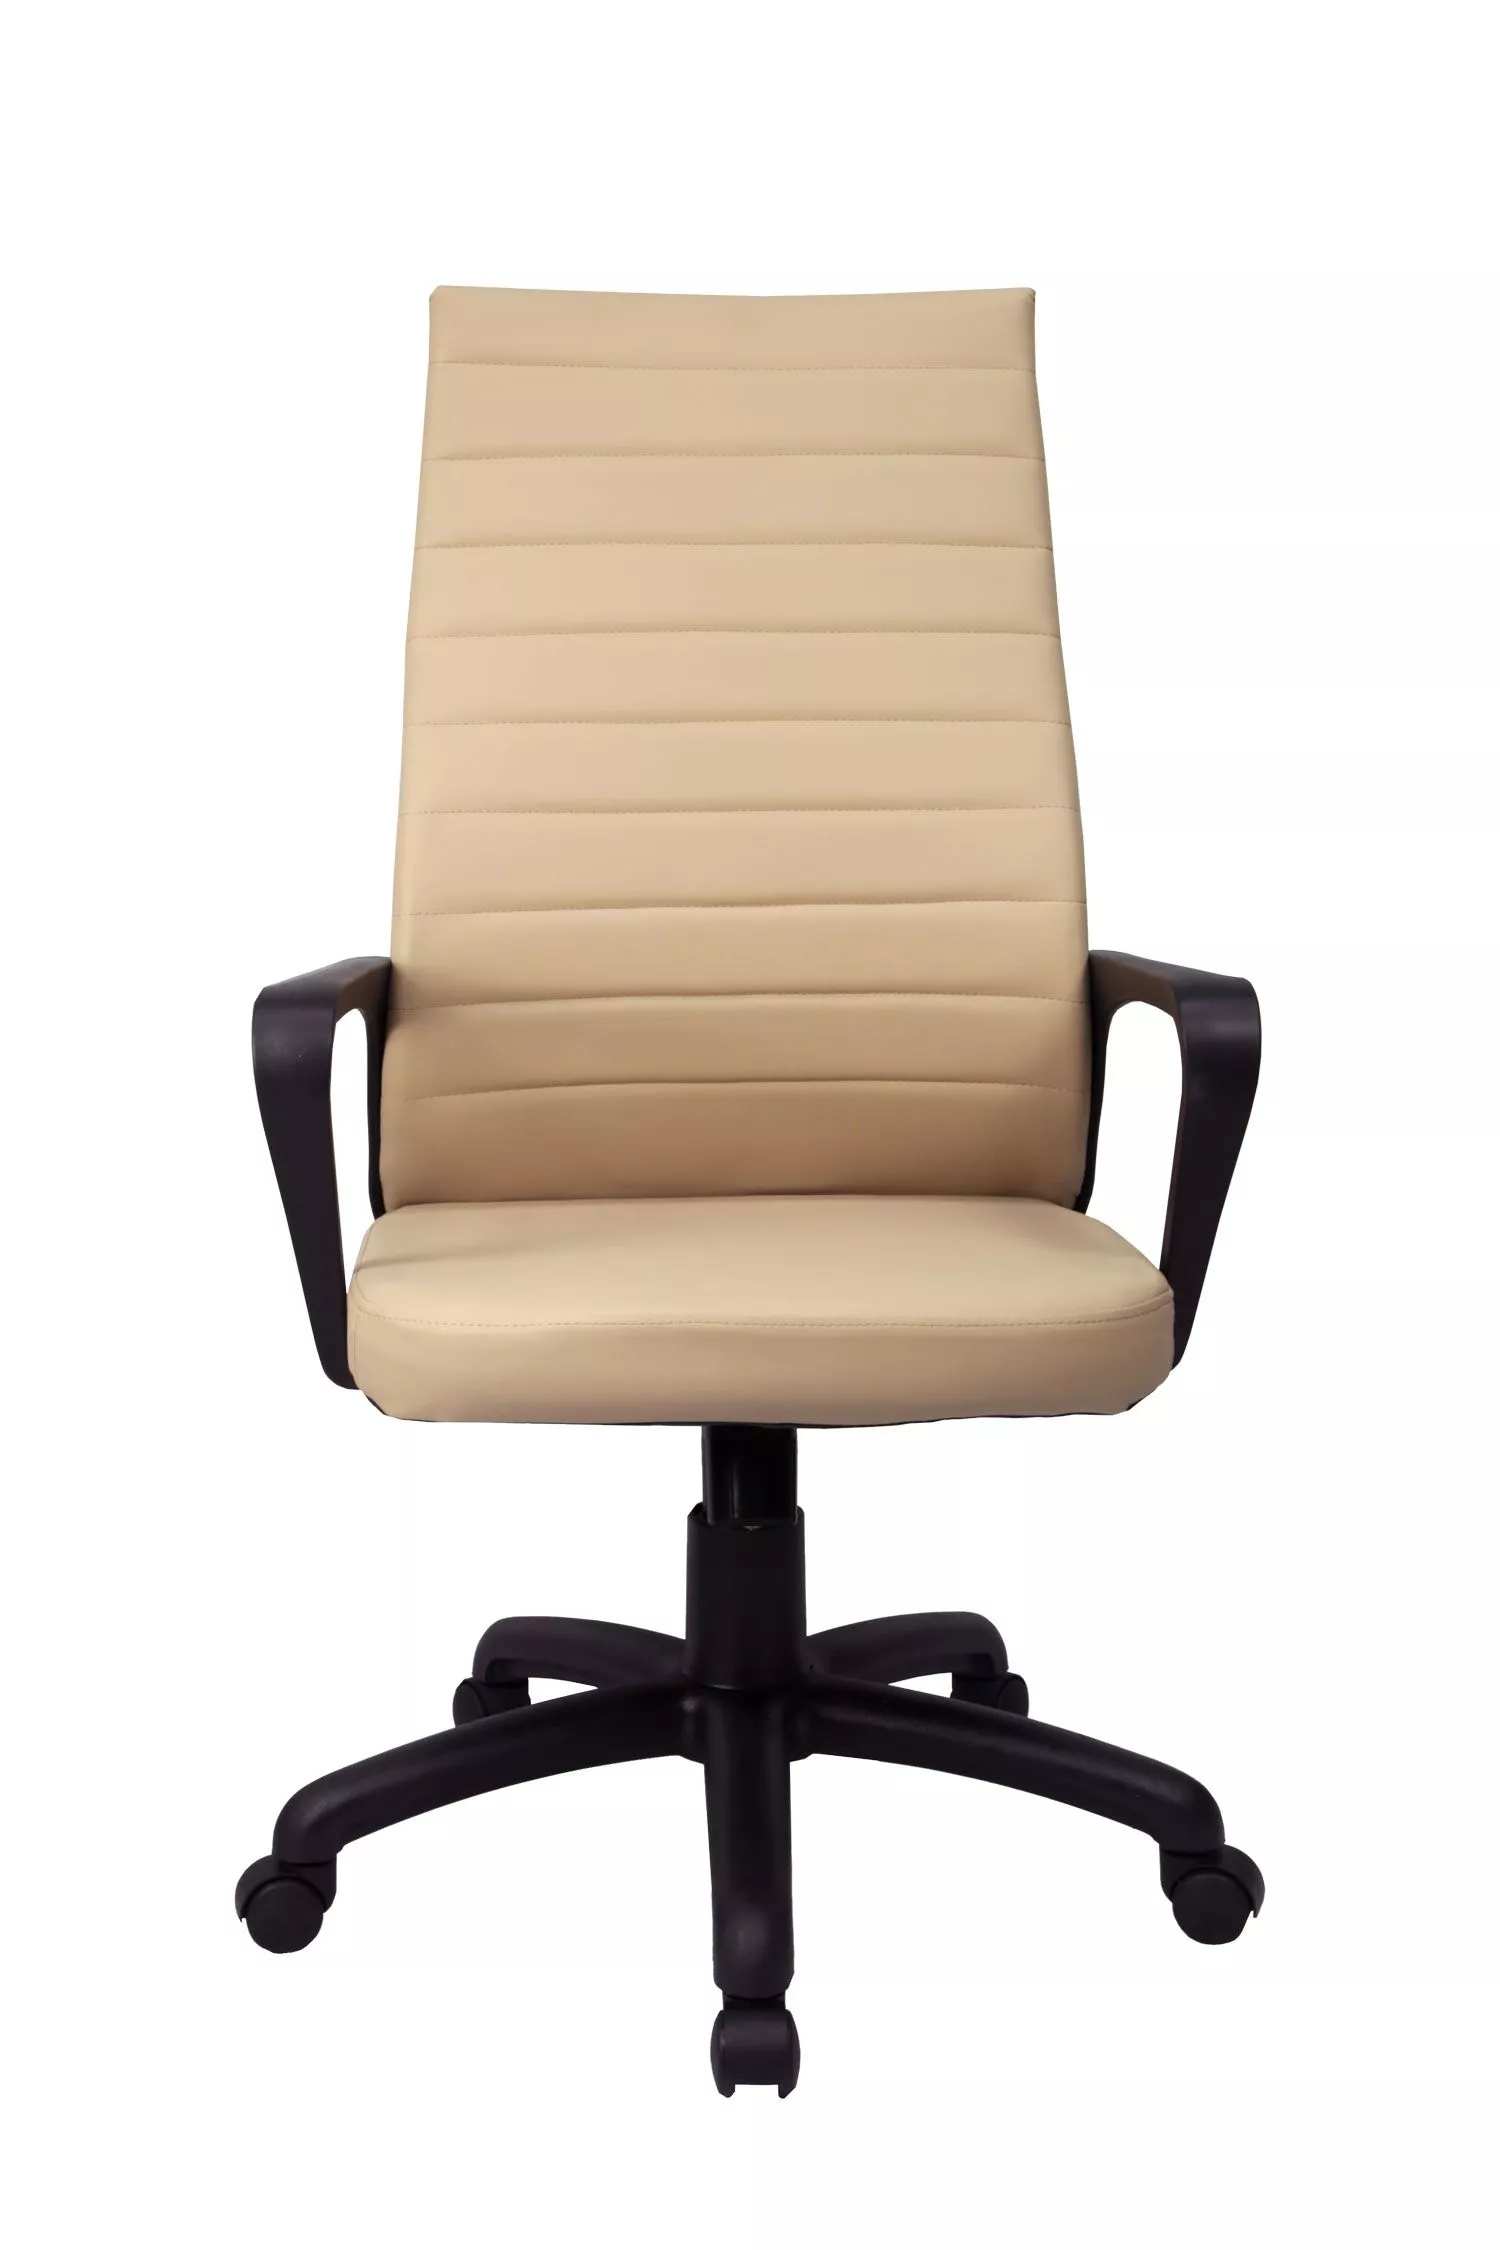 Кресло для персонала Riva Chair RUSSIA 1165-4 PL экокожа бежевый